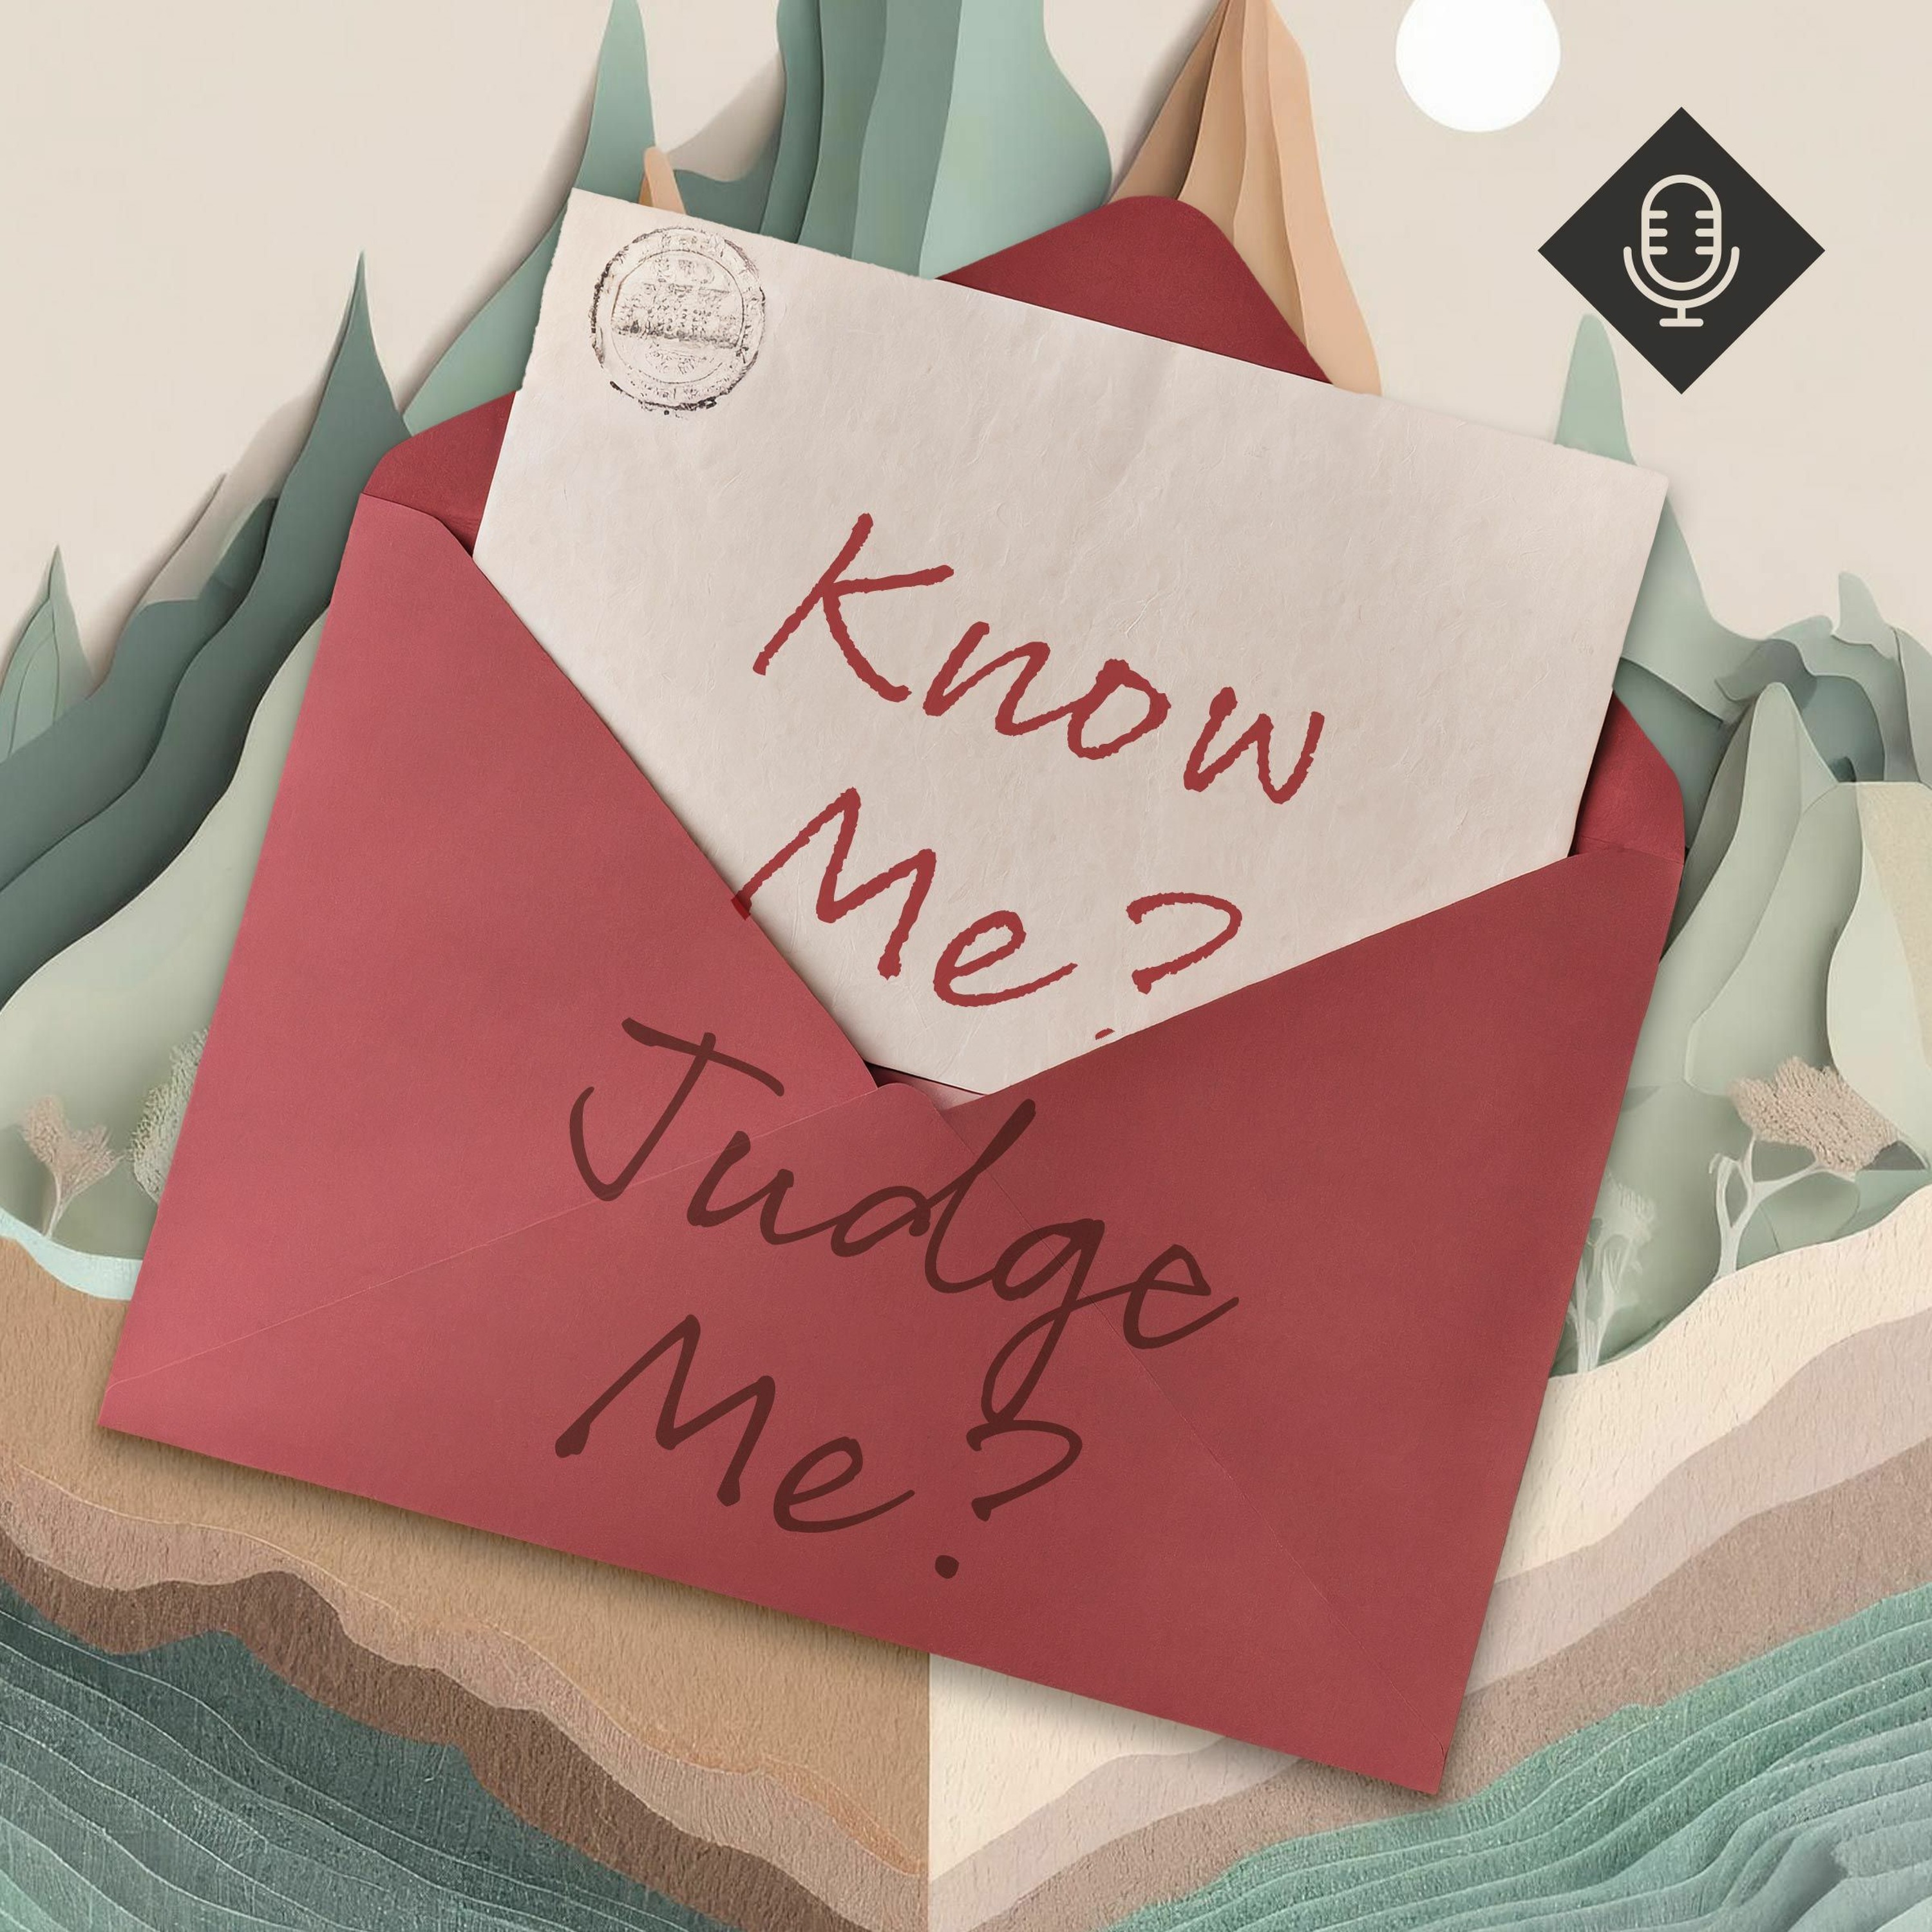 ’You Judge Me Before You Know Me’ / Neil Dawson